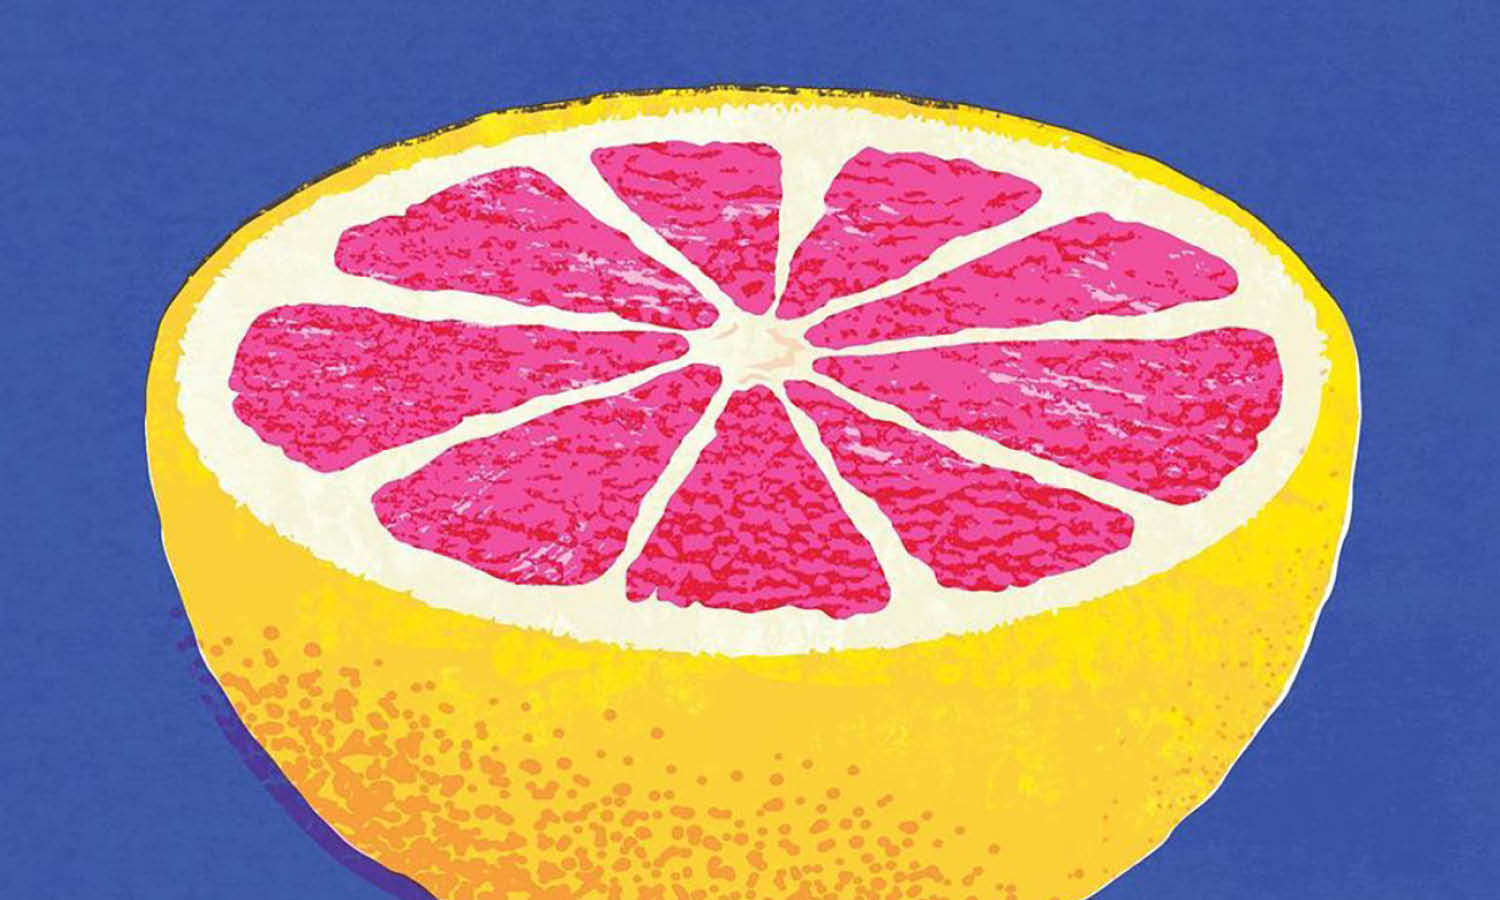 30 Best Grapefruit Illustration Ideas You Should Check